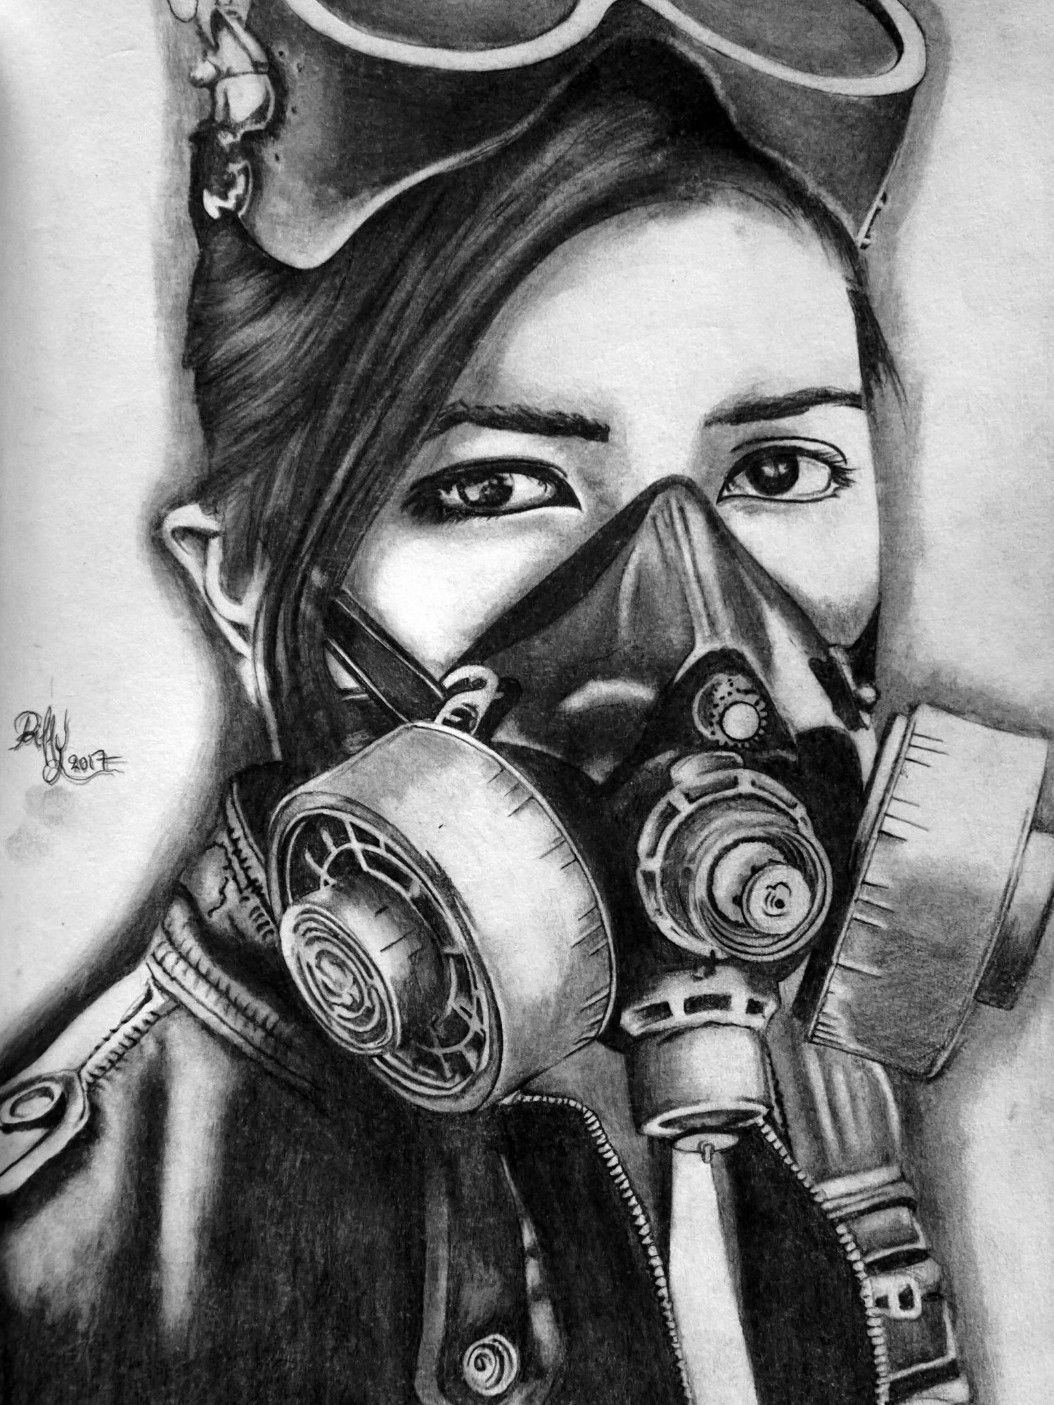 Gas Mask Soldier by EASTOmerta on DeviantArt